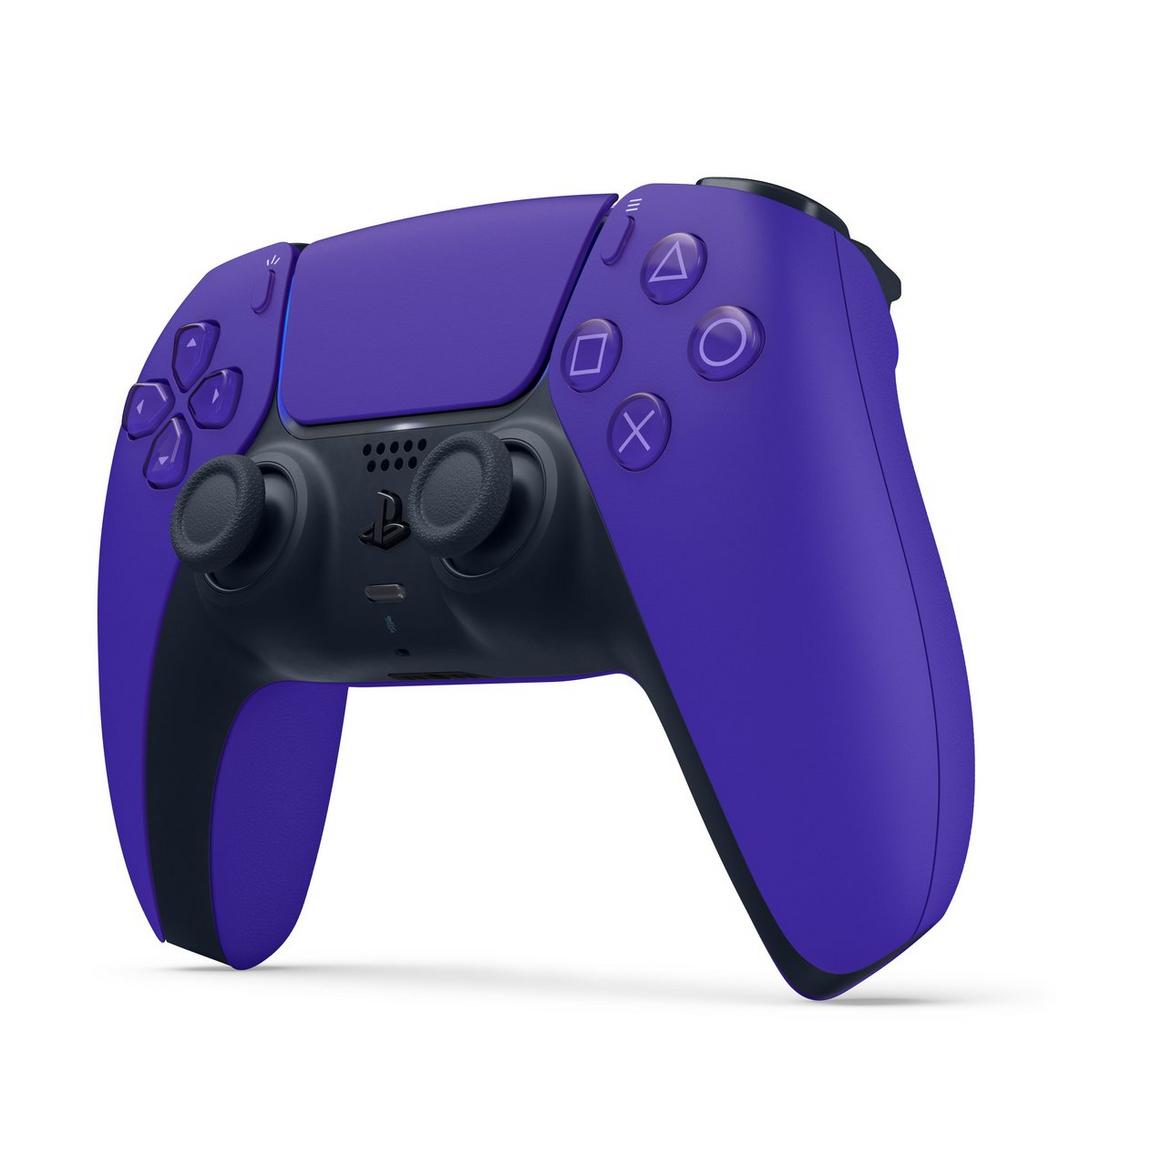 DualSense Wireless Controller [Galactic Purple] - (NEW) (Playstation 5)